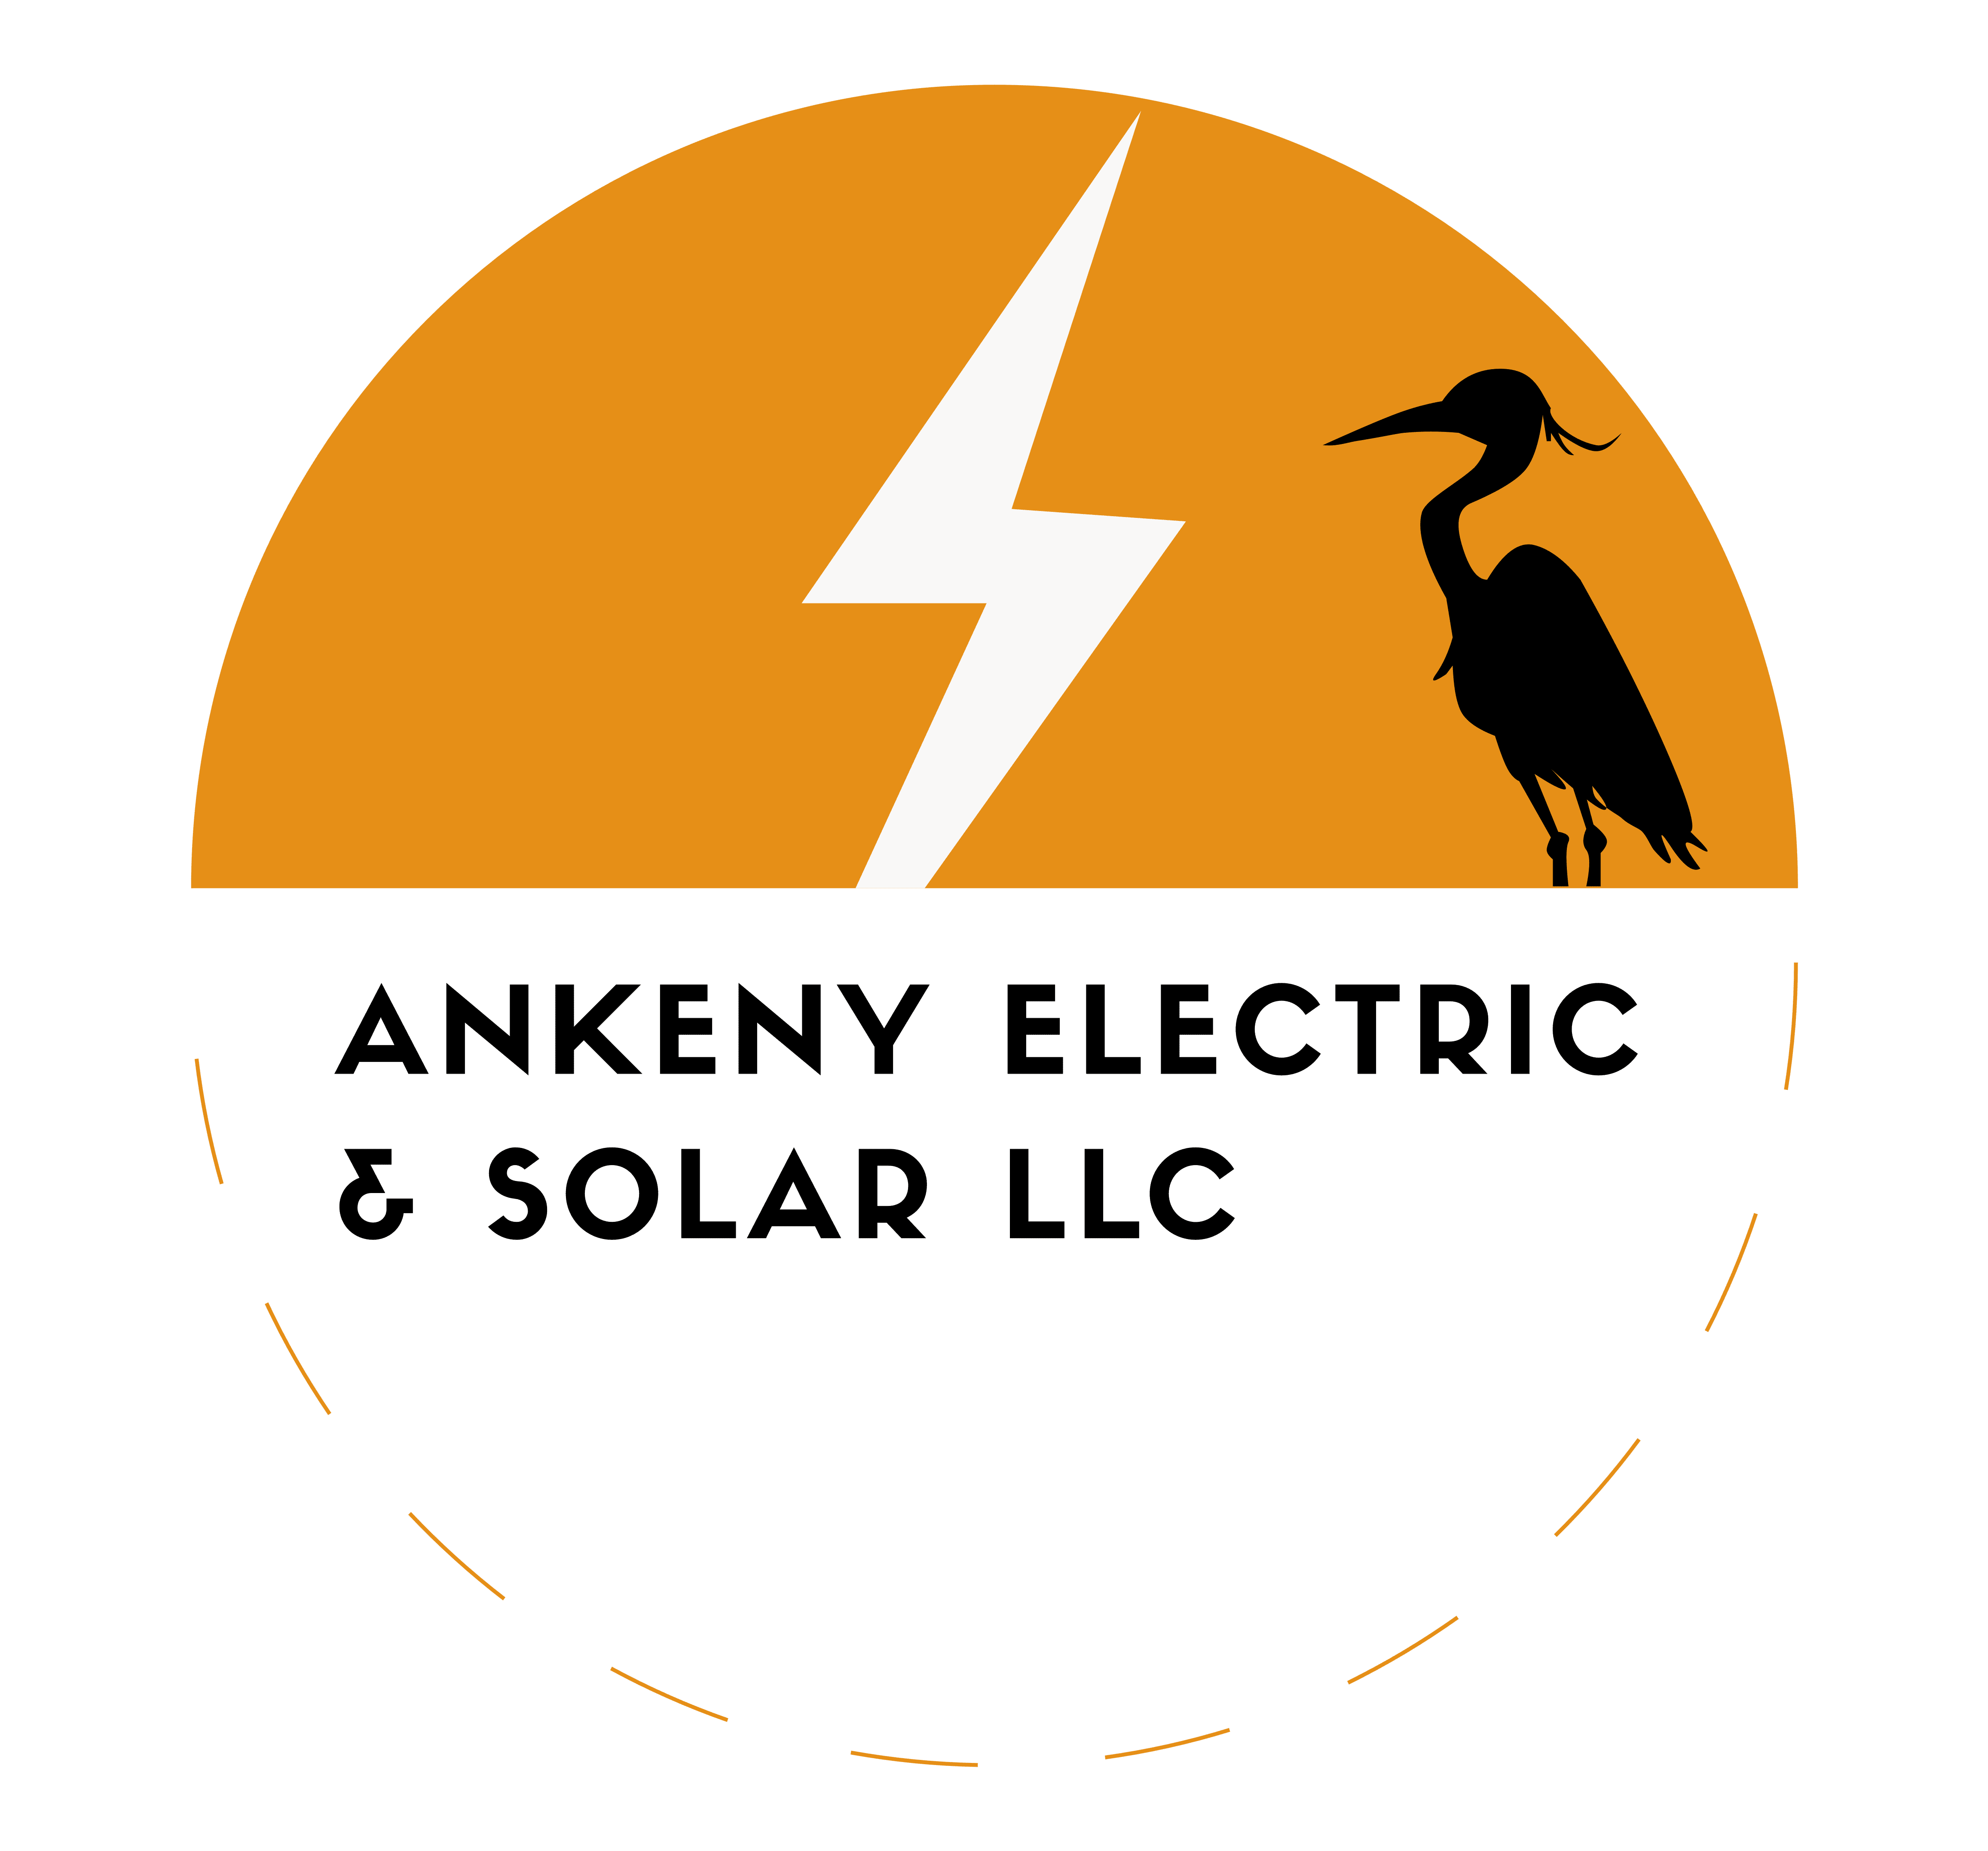 Ankeny Electric & Solar LLC